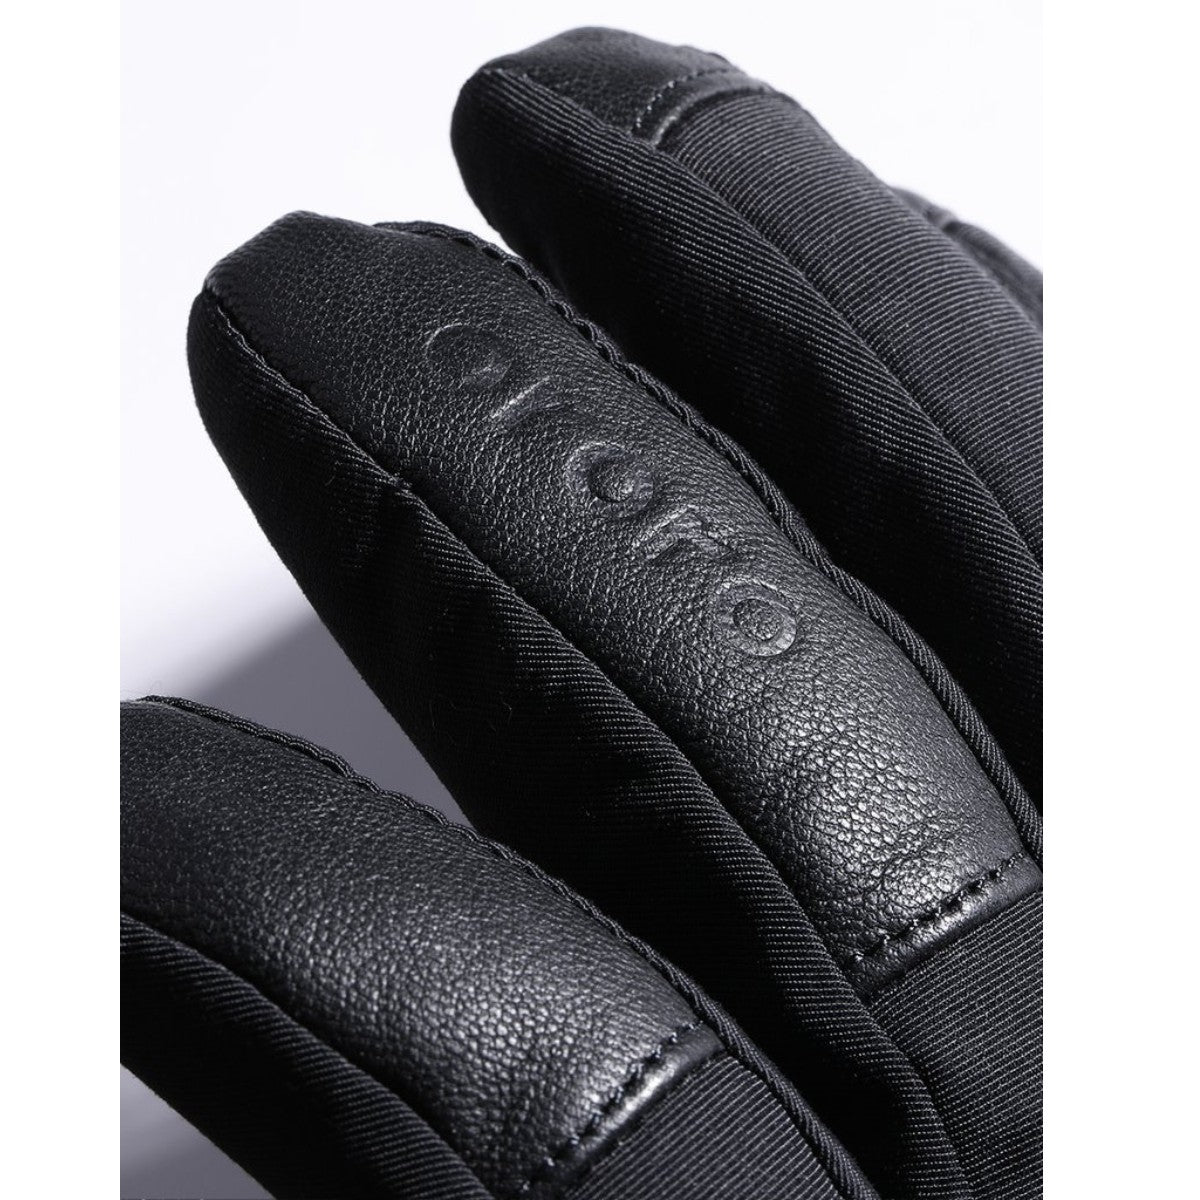 Ororo "Calgary" Heated Gloves 2.0 Black / Orange